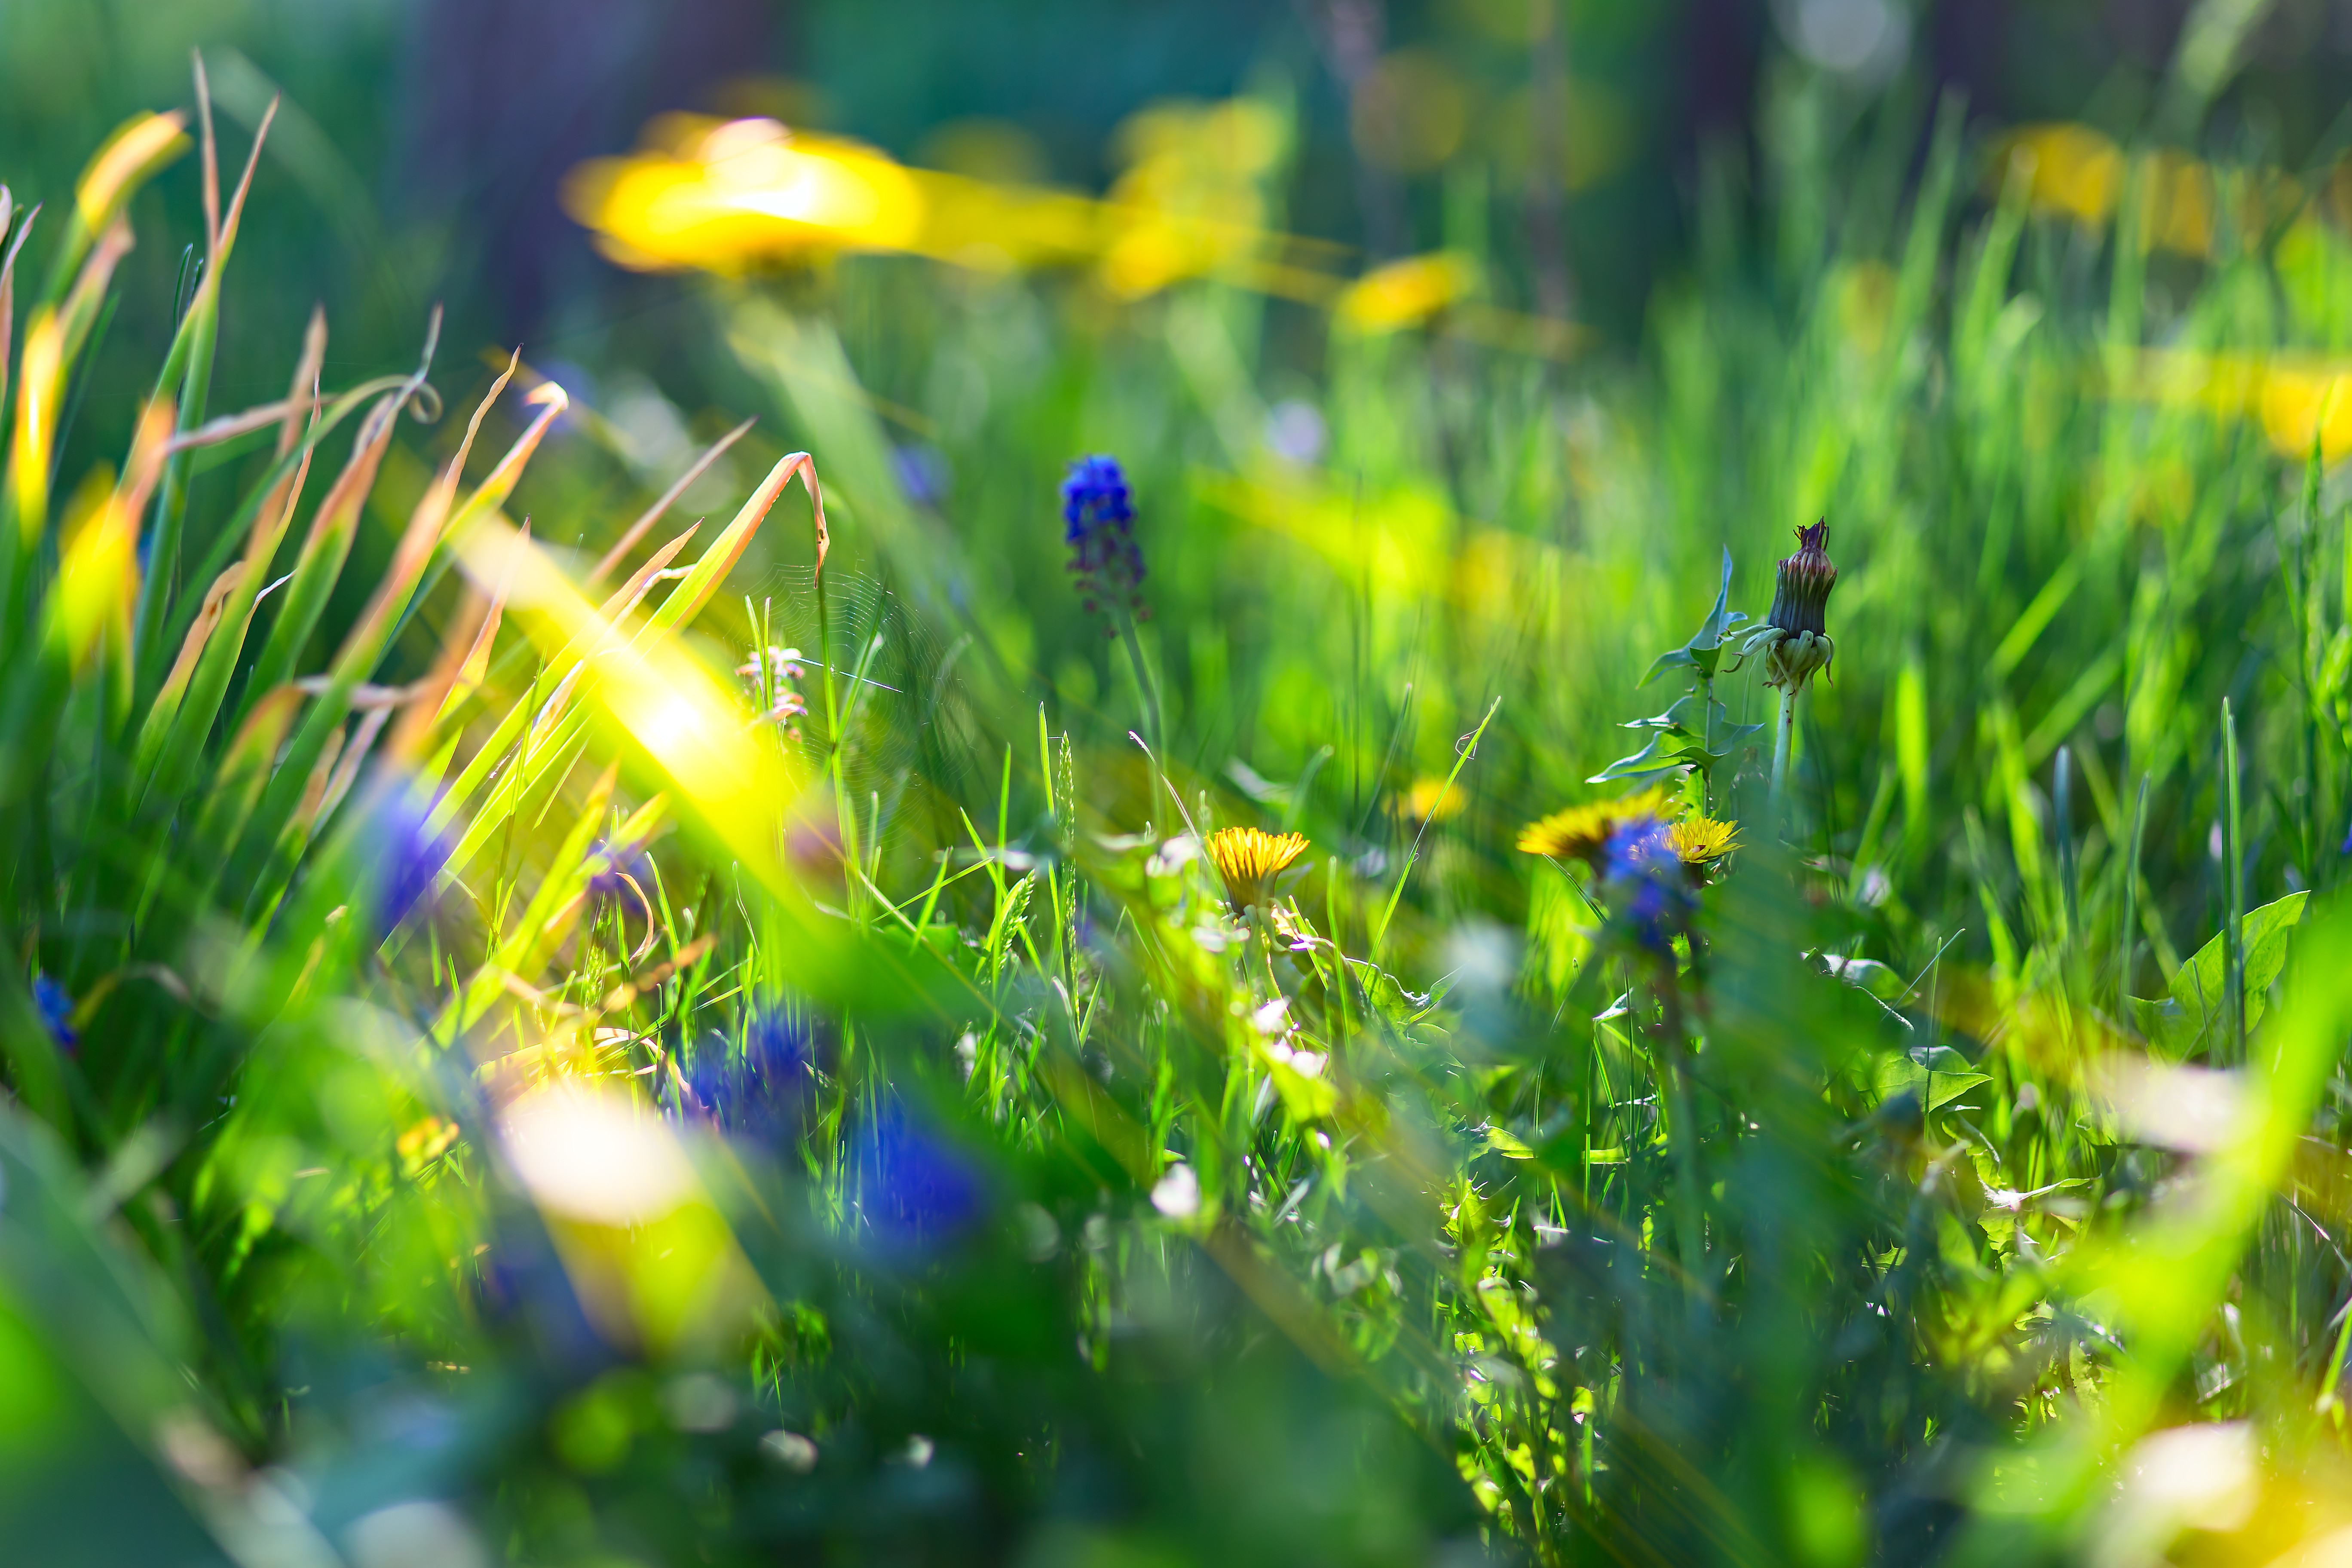 depth of field, Bokeh, Macro, Sunlight, Nature, Grass, Flowers, Blue flowers Wallpaper